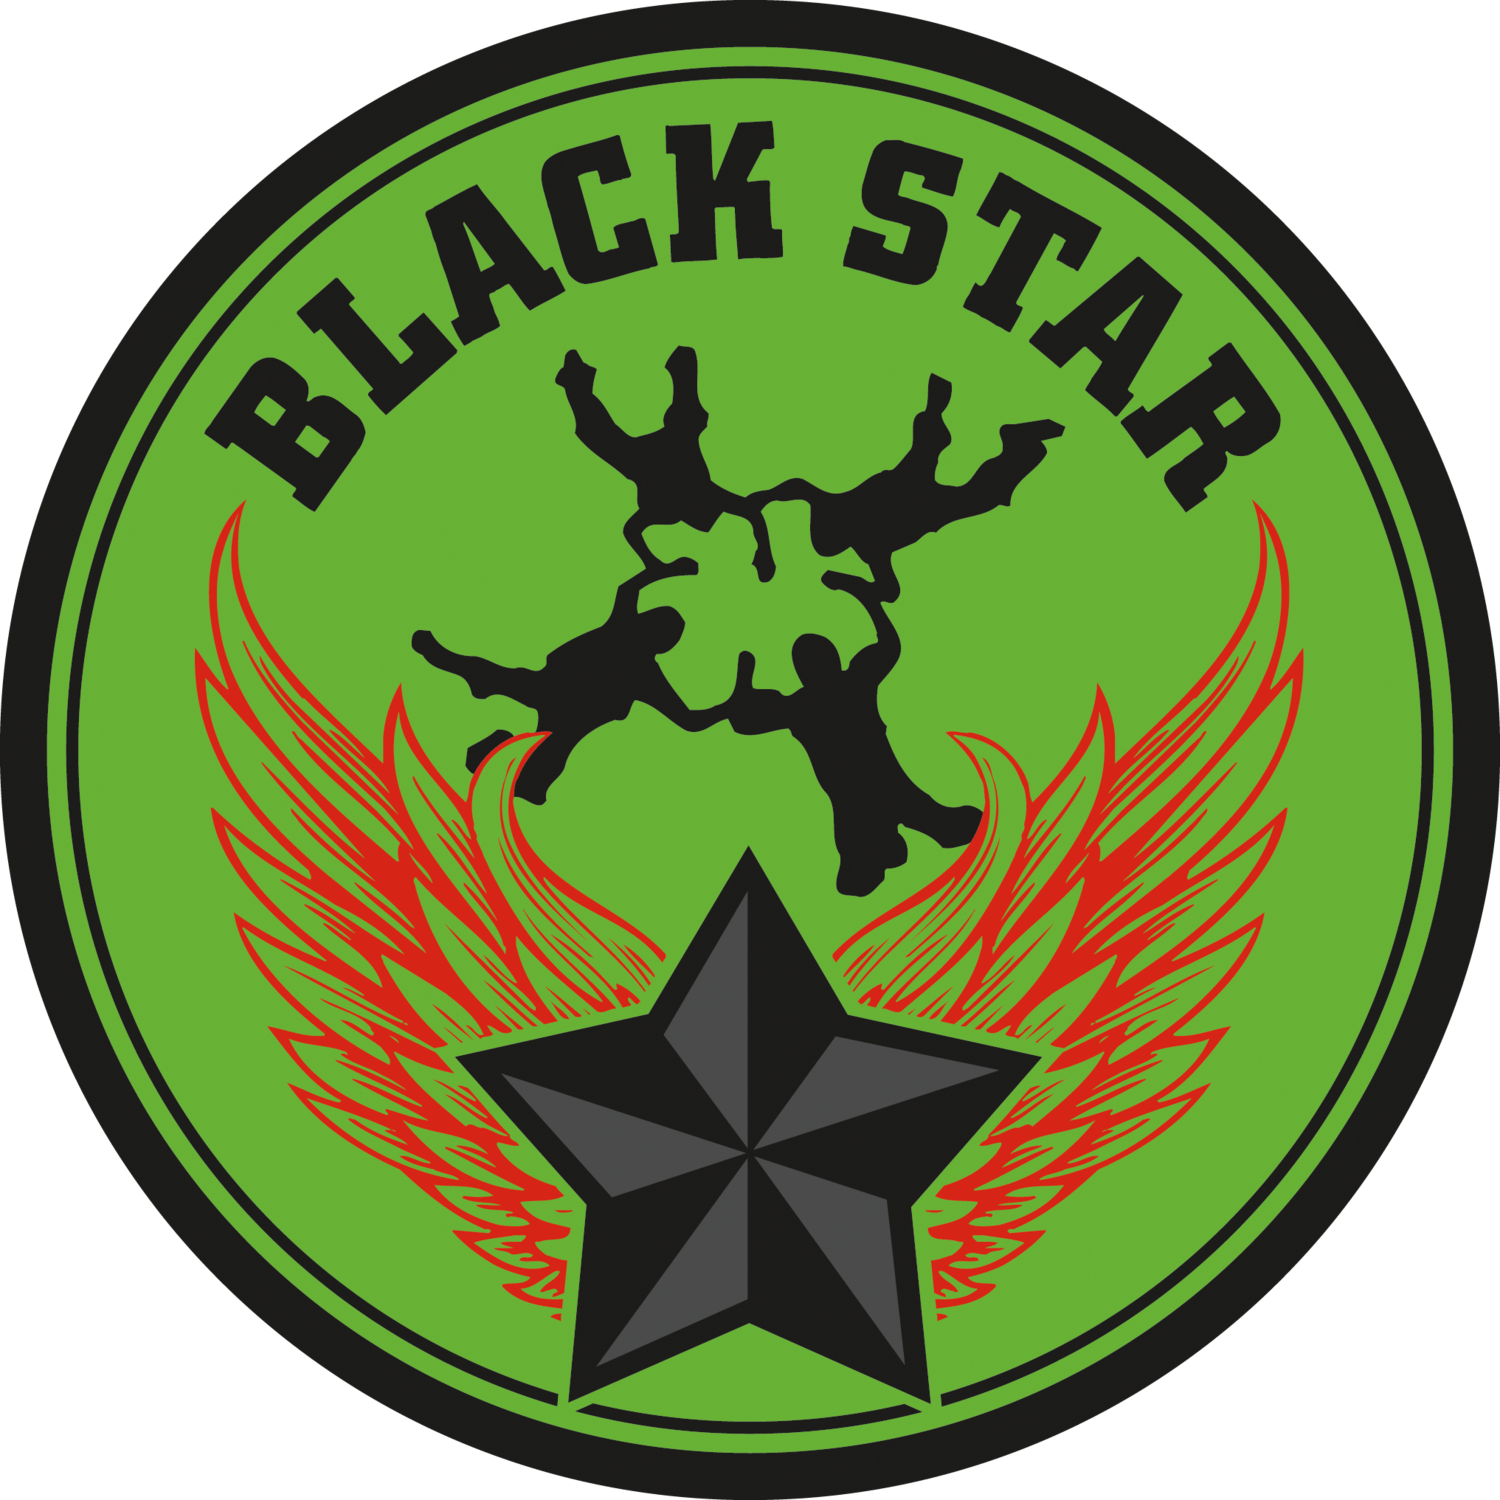 Black Star in Circle Logo - Team Blackstar